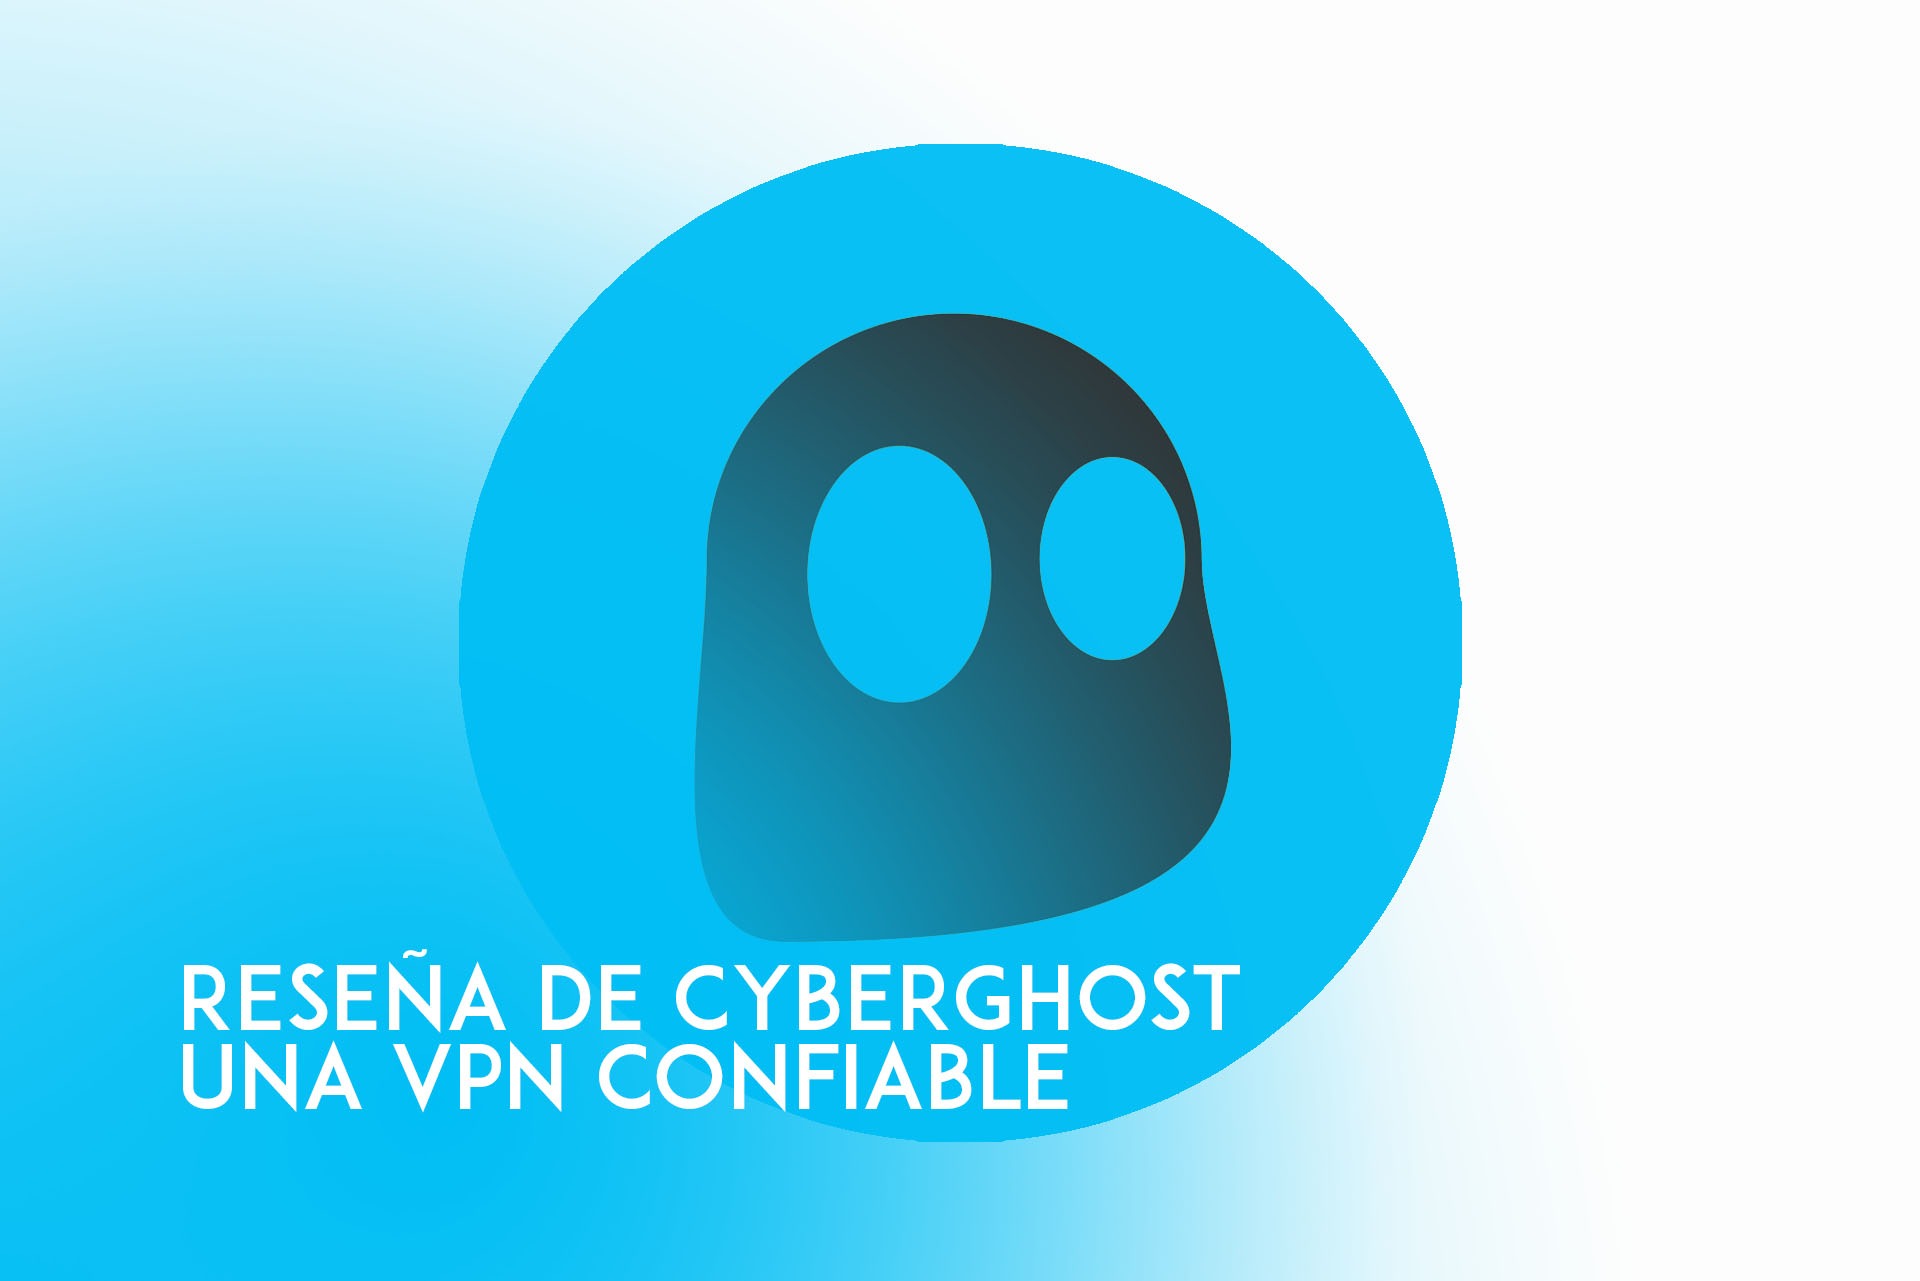 Cyberghost - reseña a una vpn confiable